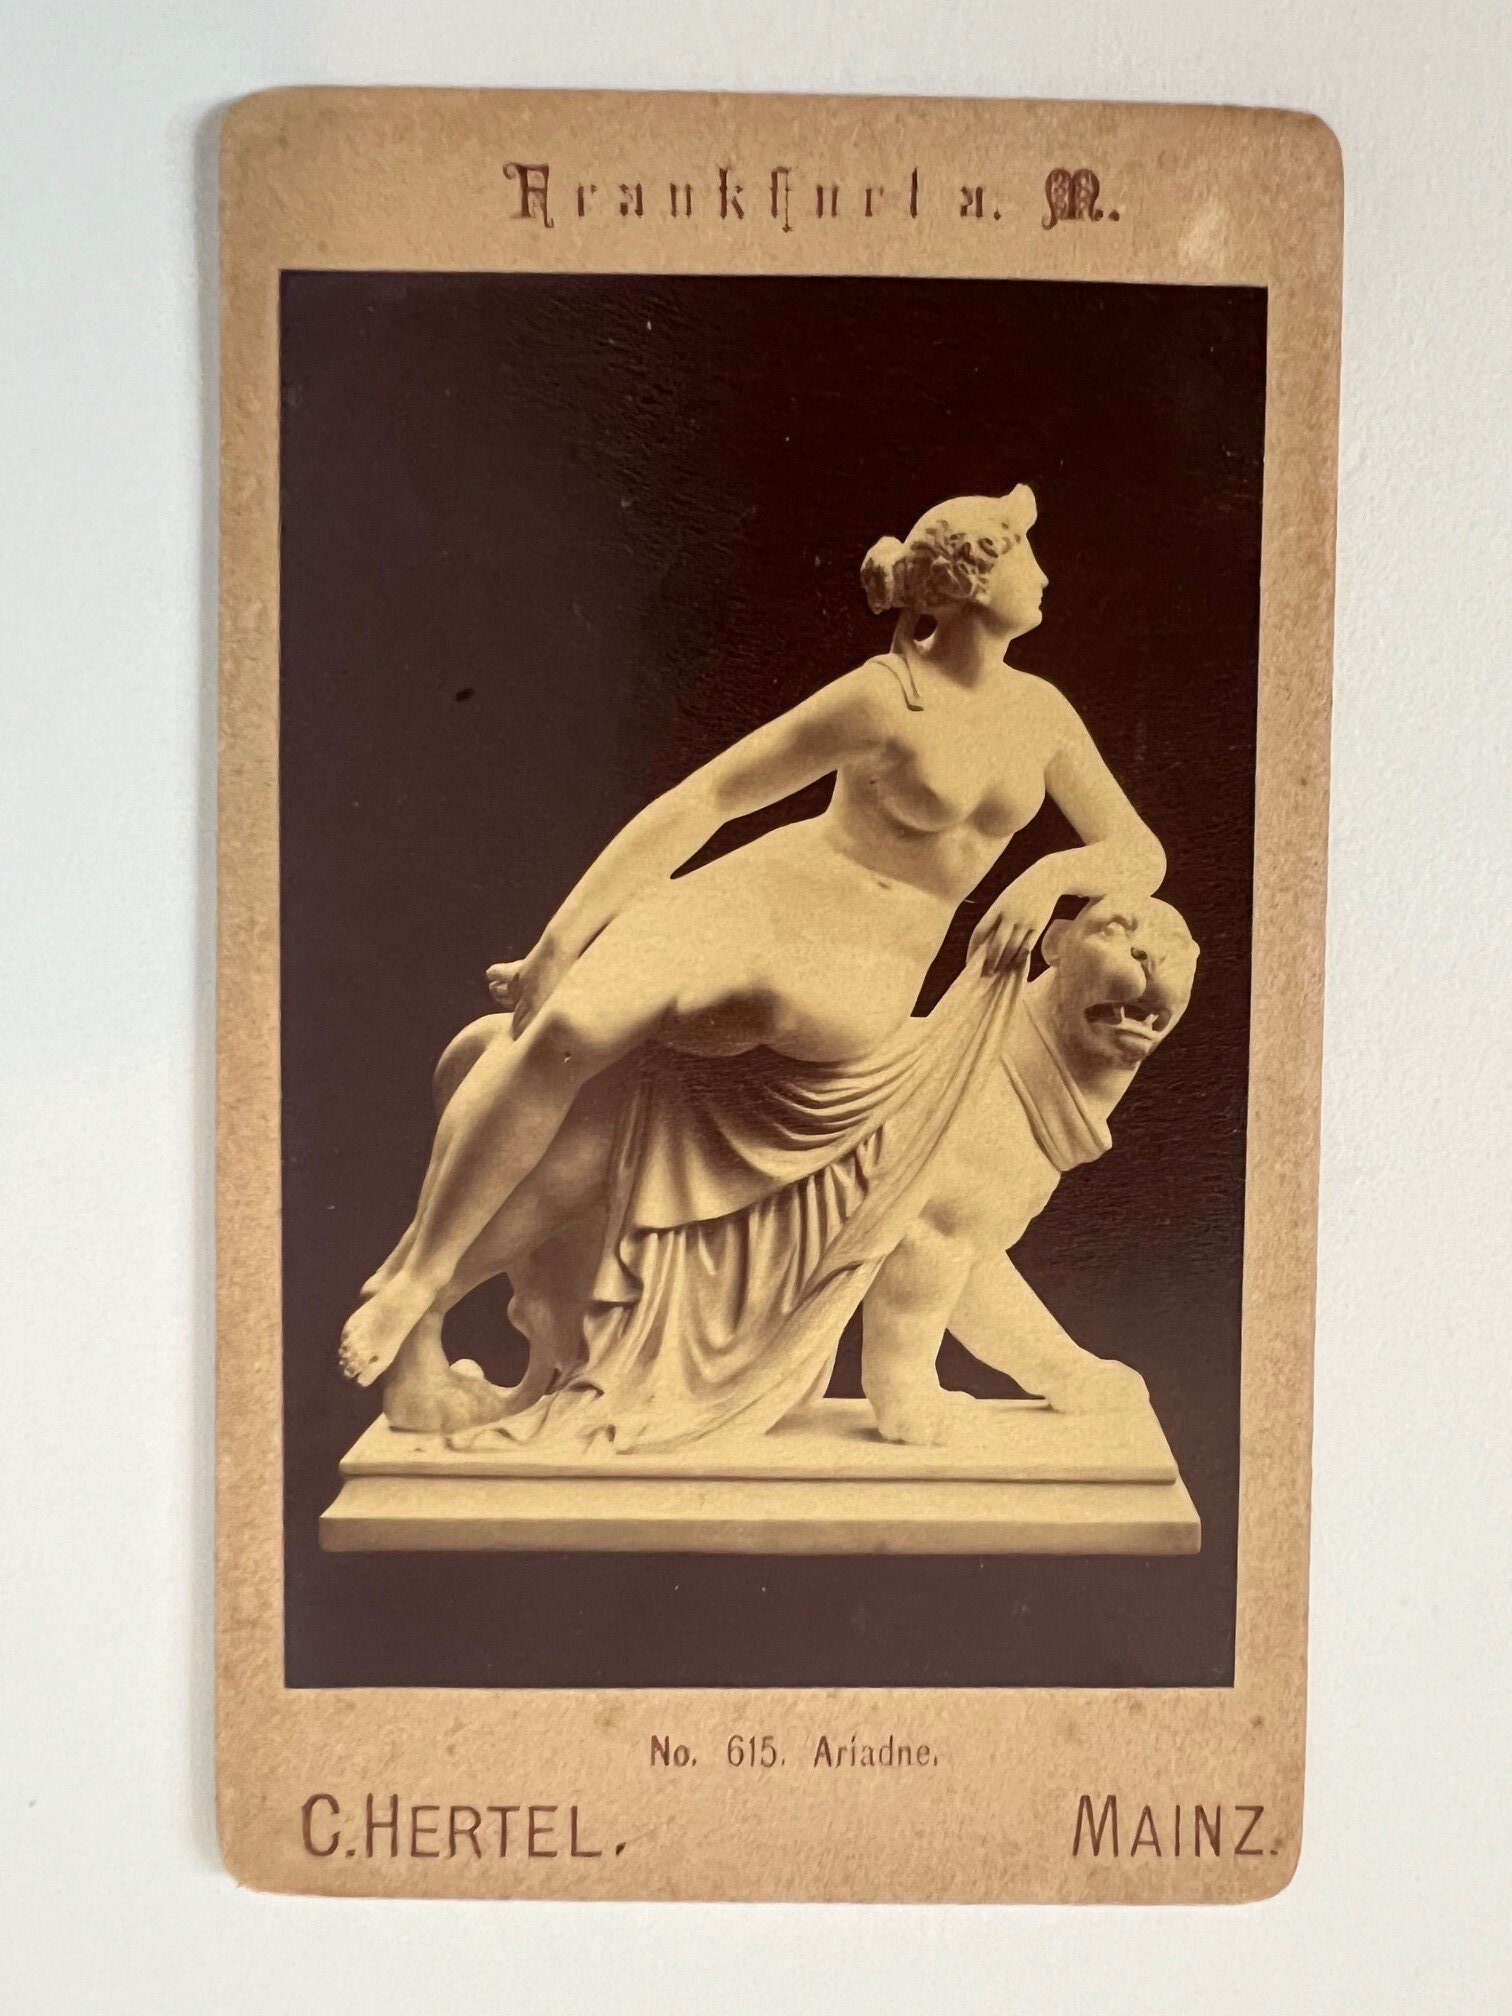 CdV, Carl Hertel, Frankfurt, Nr. 615, Ariadne, ca. 1886. (Taunus-Rhein-Main - Regionalgeschichtliche Sammlung Dr. Stefan Naas CC BY-NC-SA)